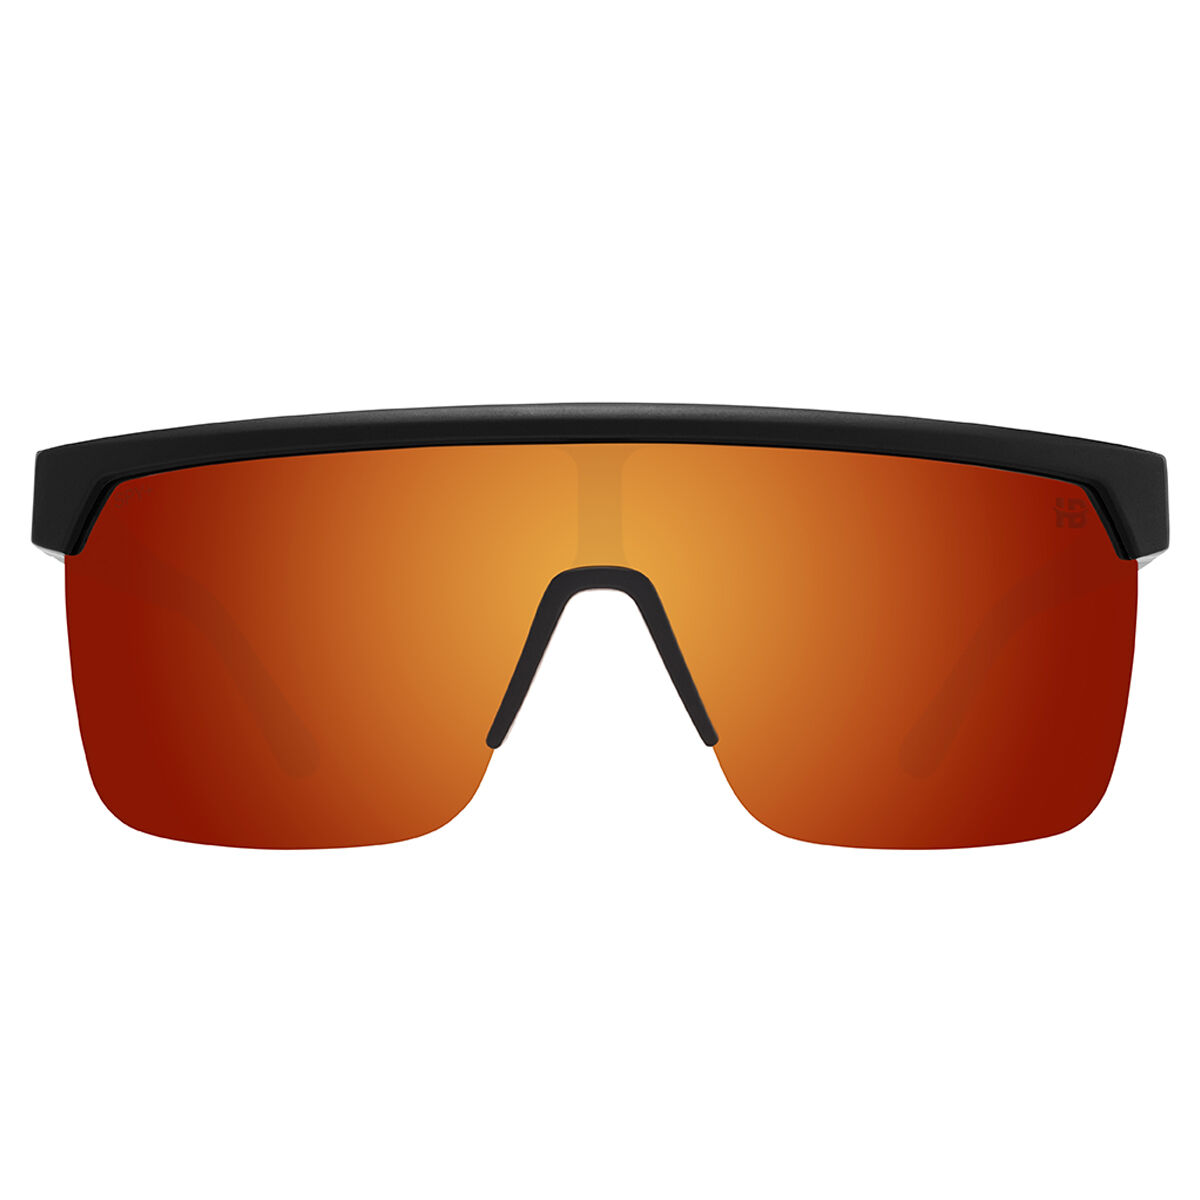 CHANEL Sunglasses | Buy Online - US